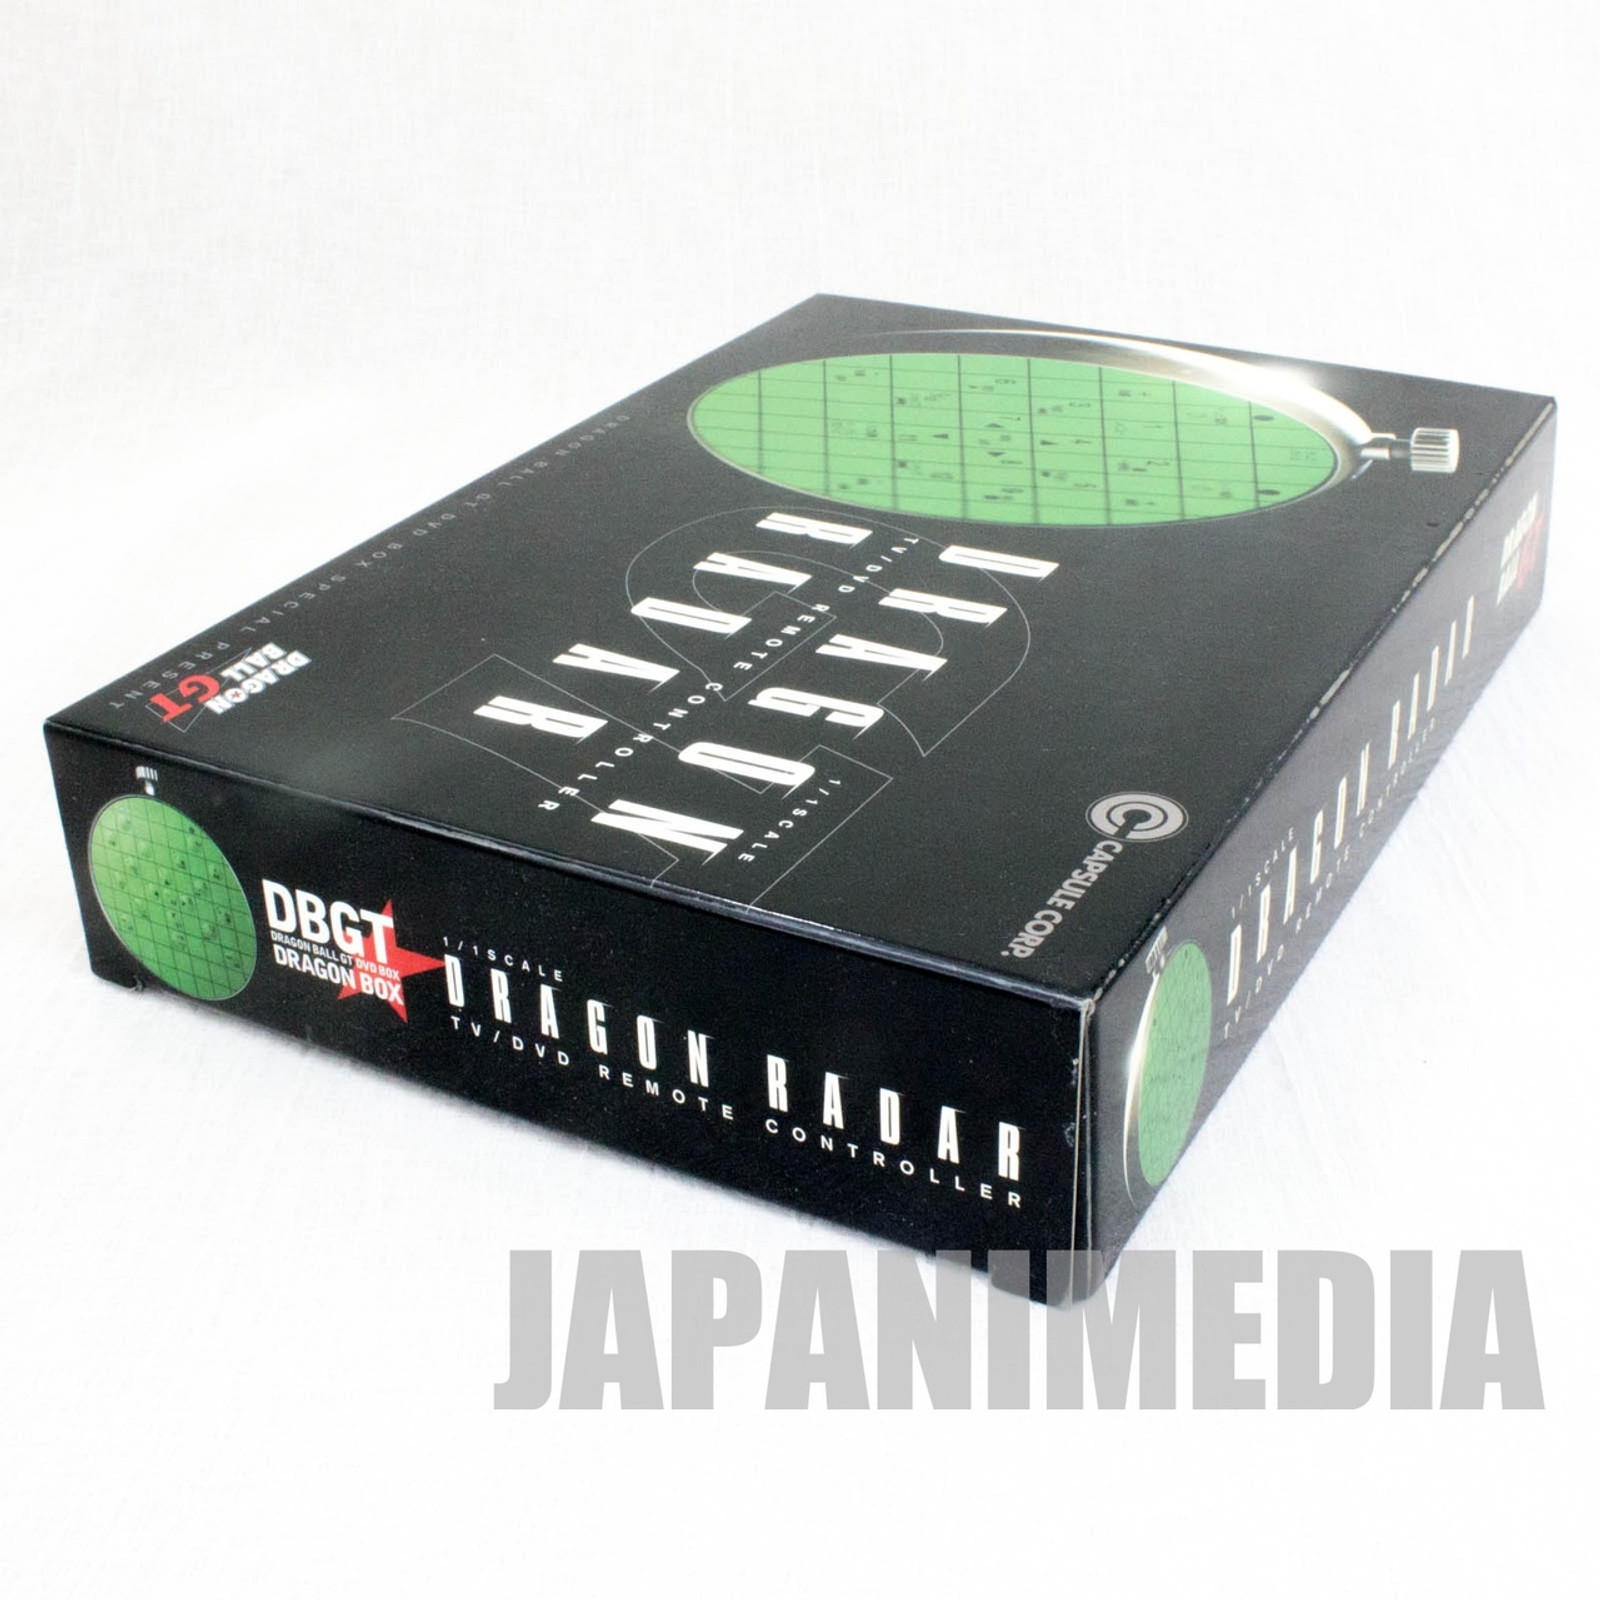 Dragon Ball Z Dragon Radar Type TV/DVD Remote Controller 1/1 scale JAPAN ANIME